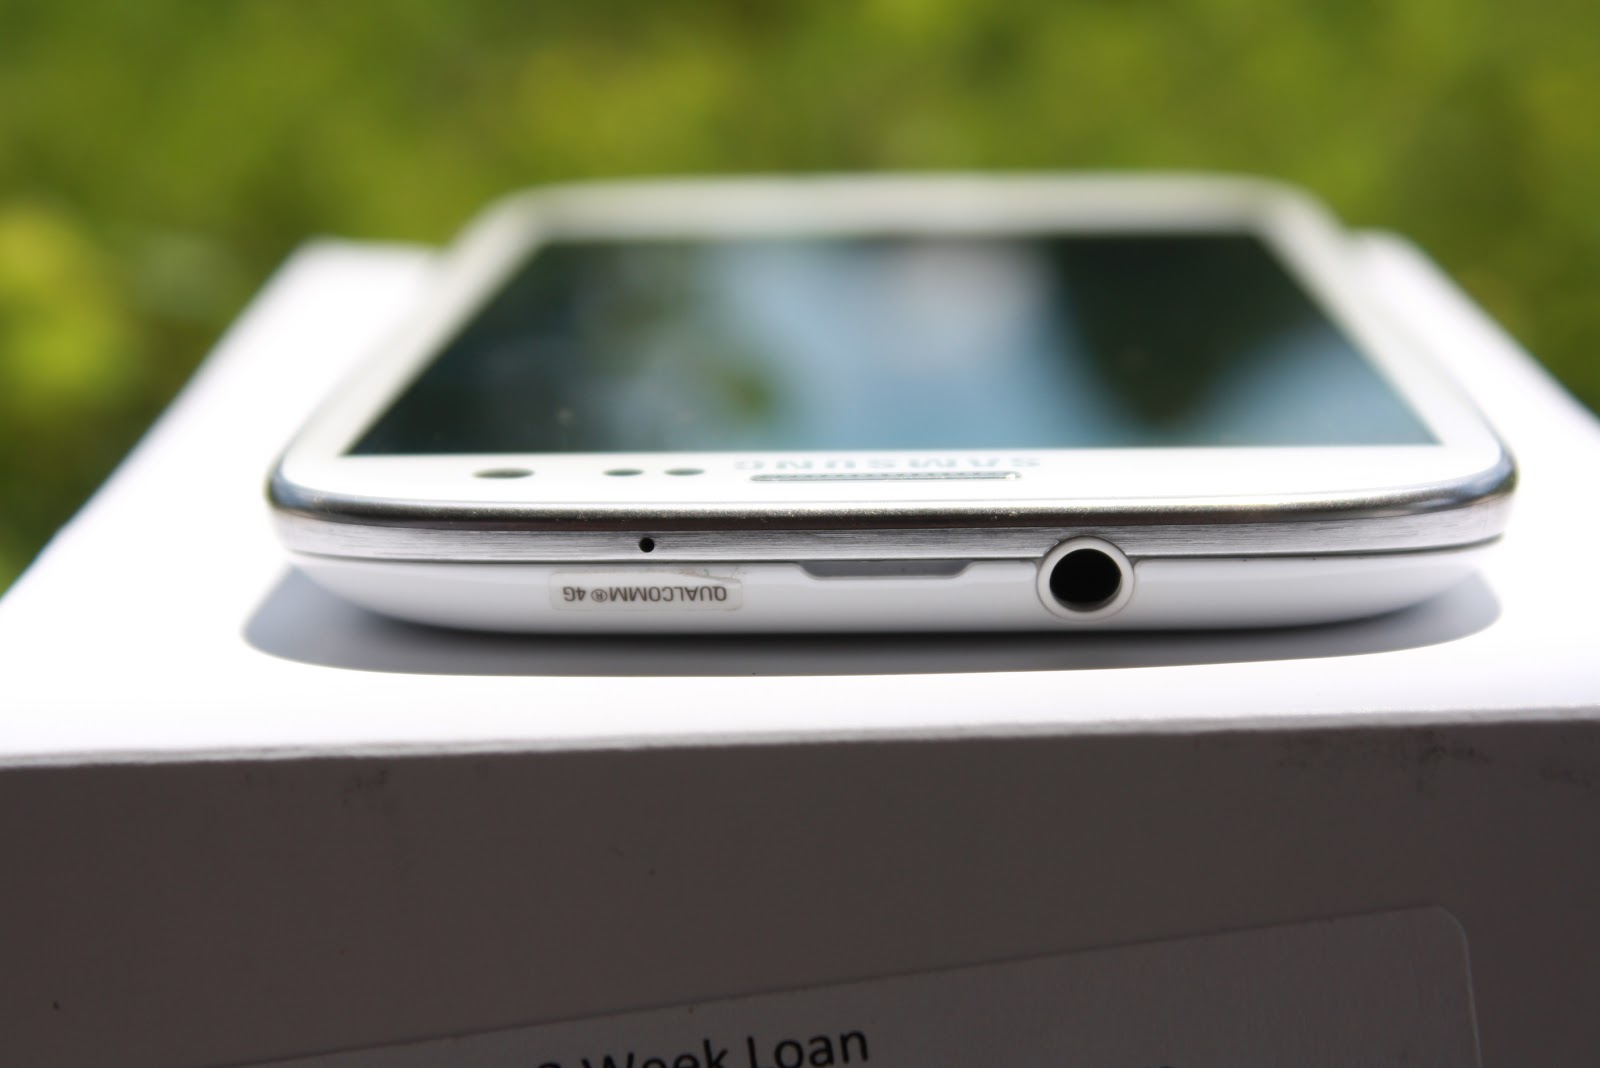 Phones Phones Phones : Samsung Galaxy S3 - Mobile Phones Review ...